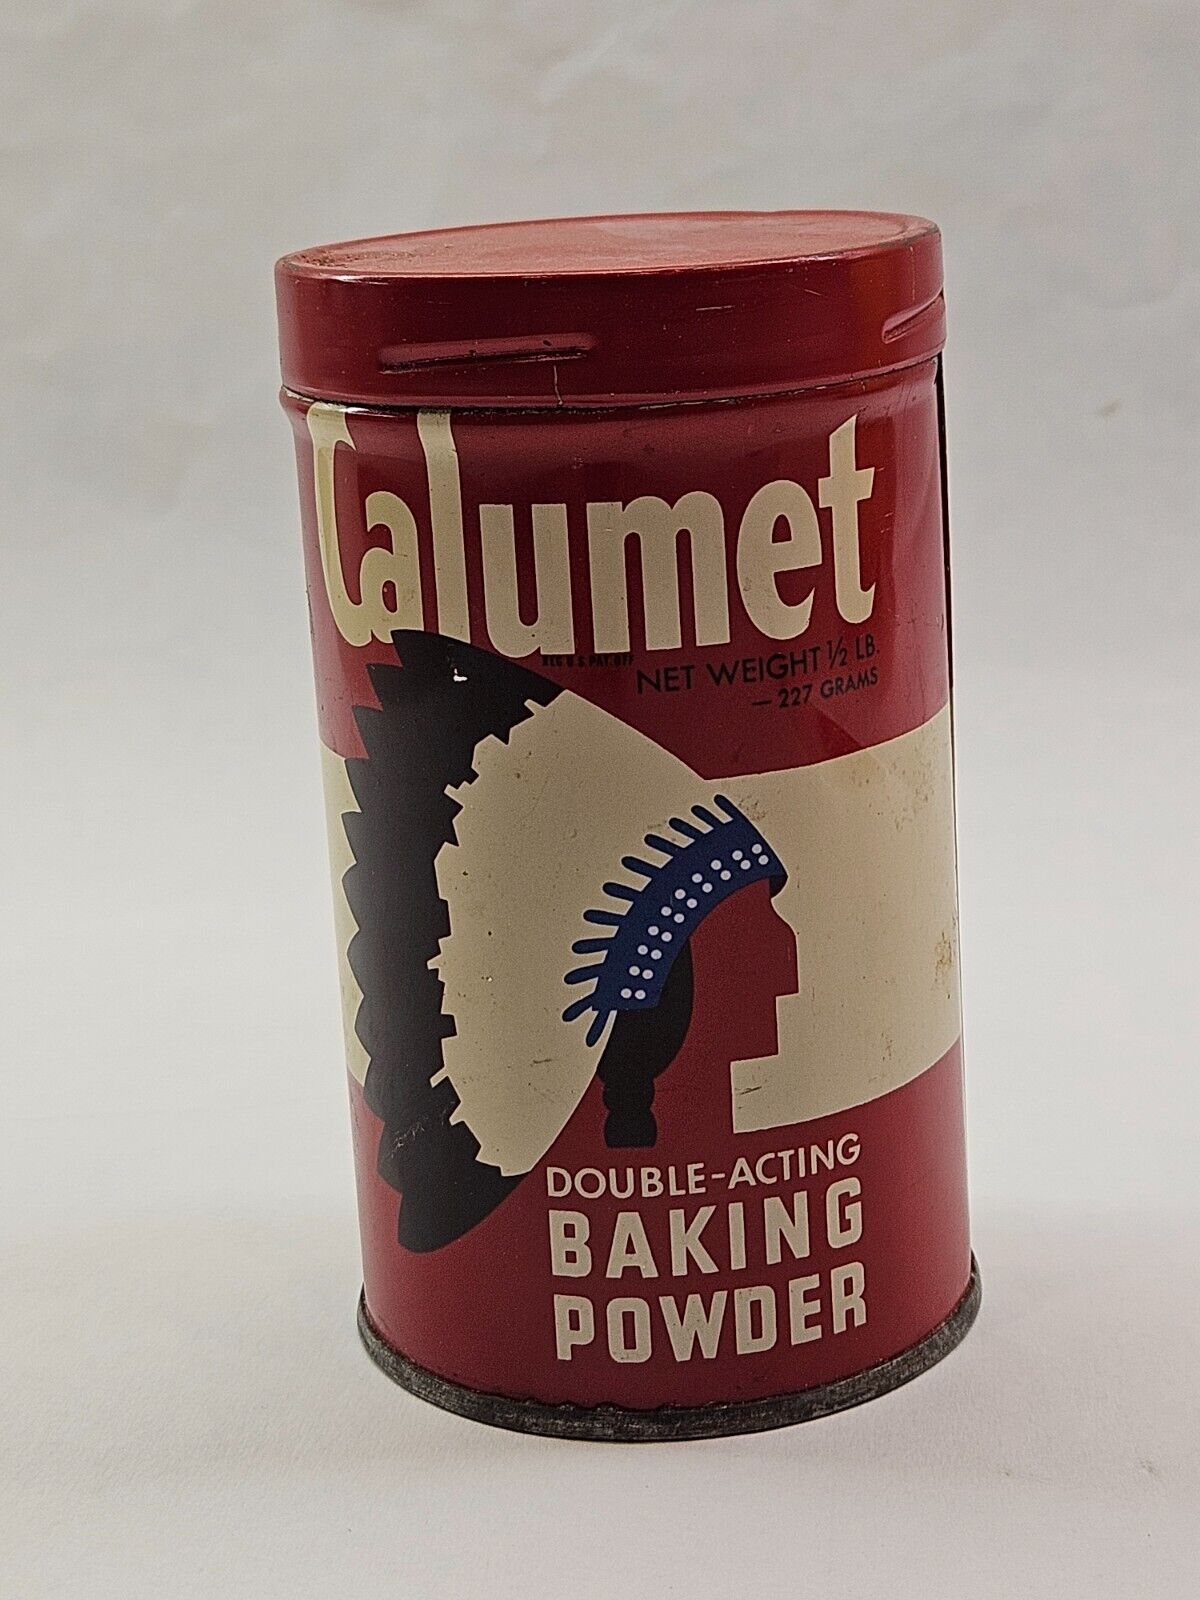 Vintage 1960's Calumet Baking Powder 1/2 lb Can, VGC